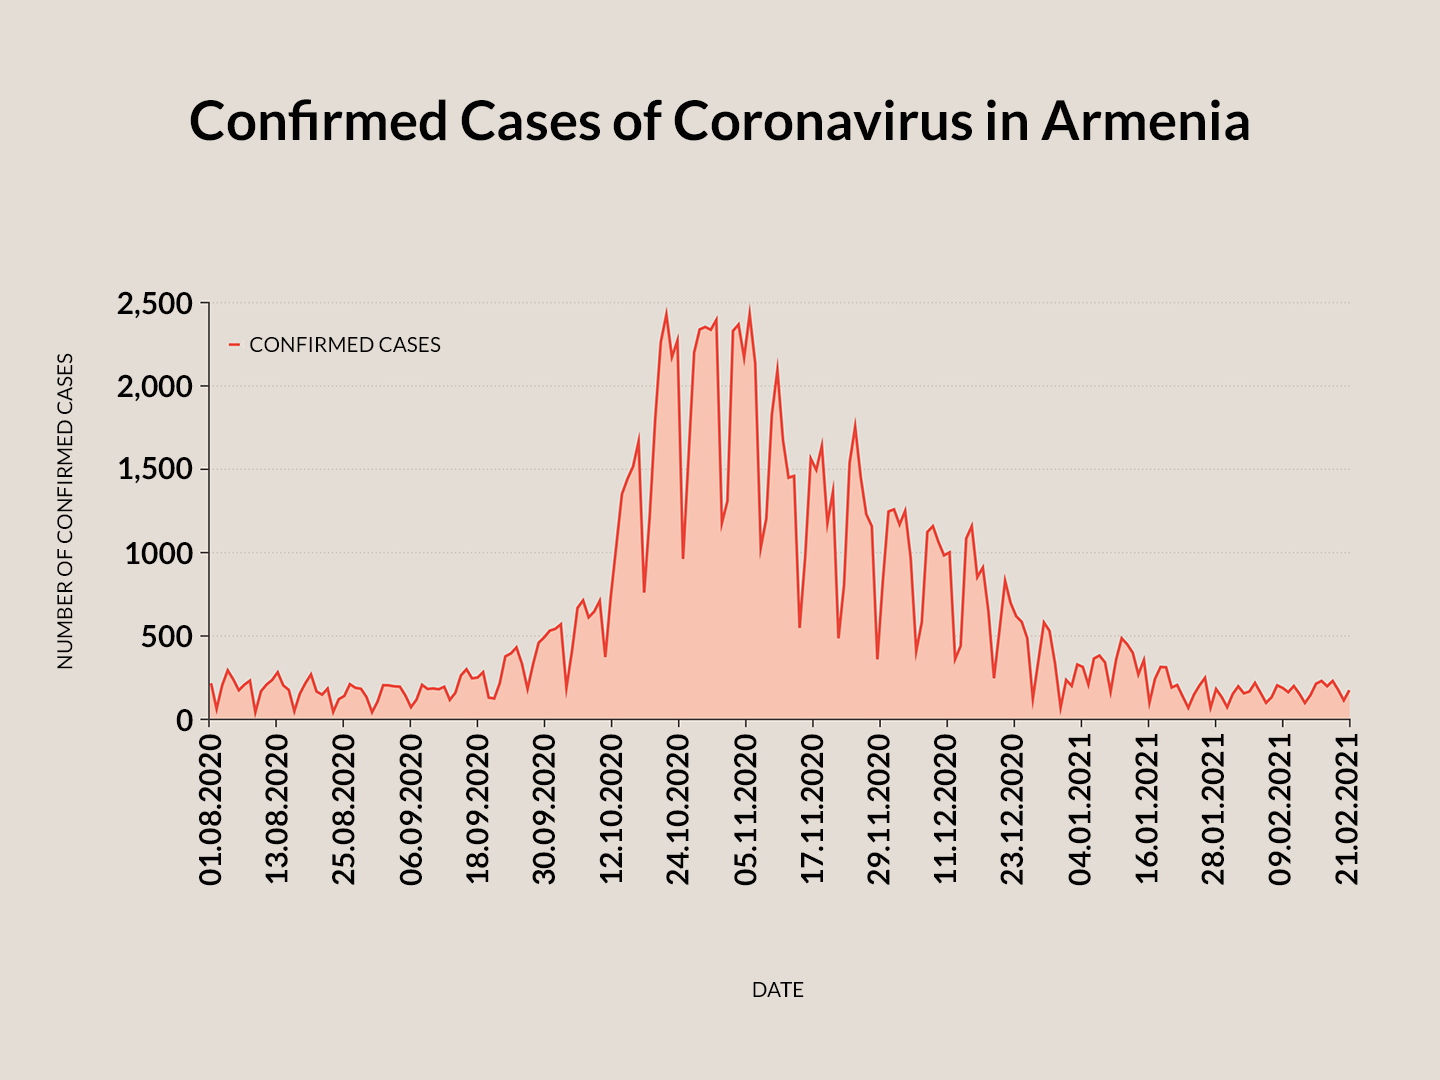 Confirmed cases of coronavirus in Armenia